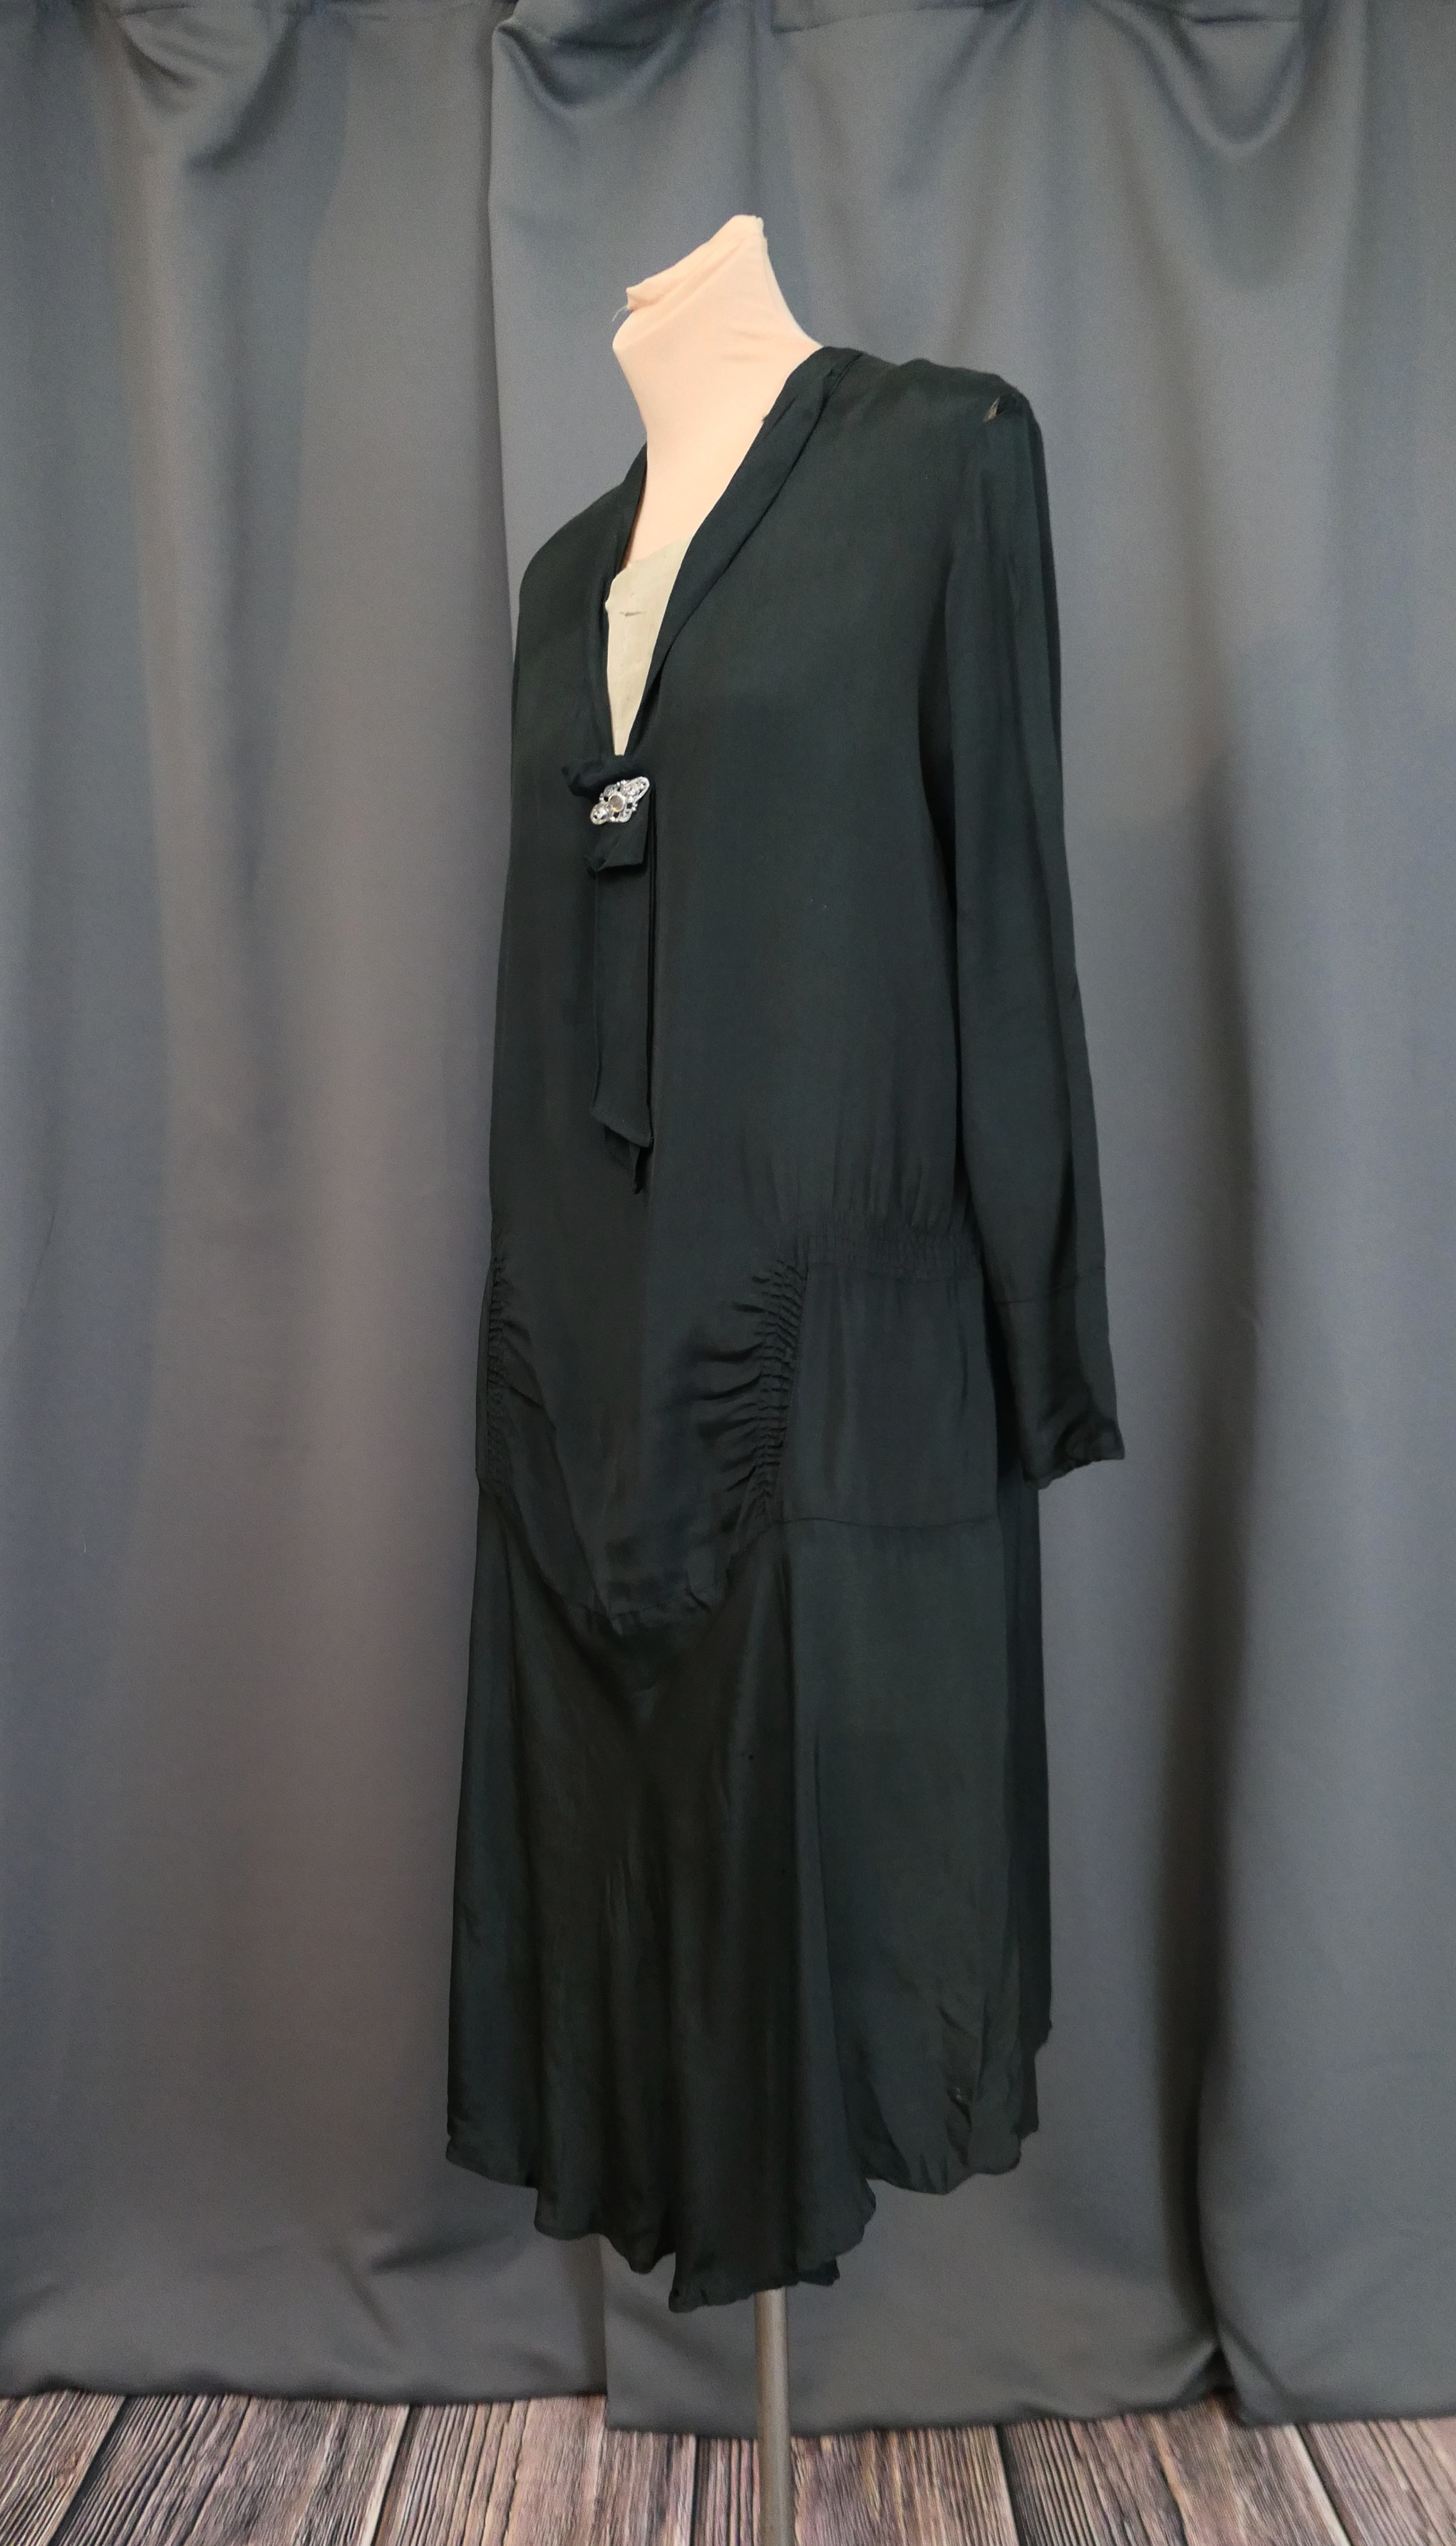 Vintage 1920s Black Crepe Chiffon Dress, fits 38 inch bust, Damaged